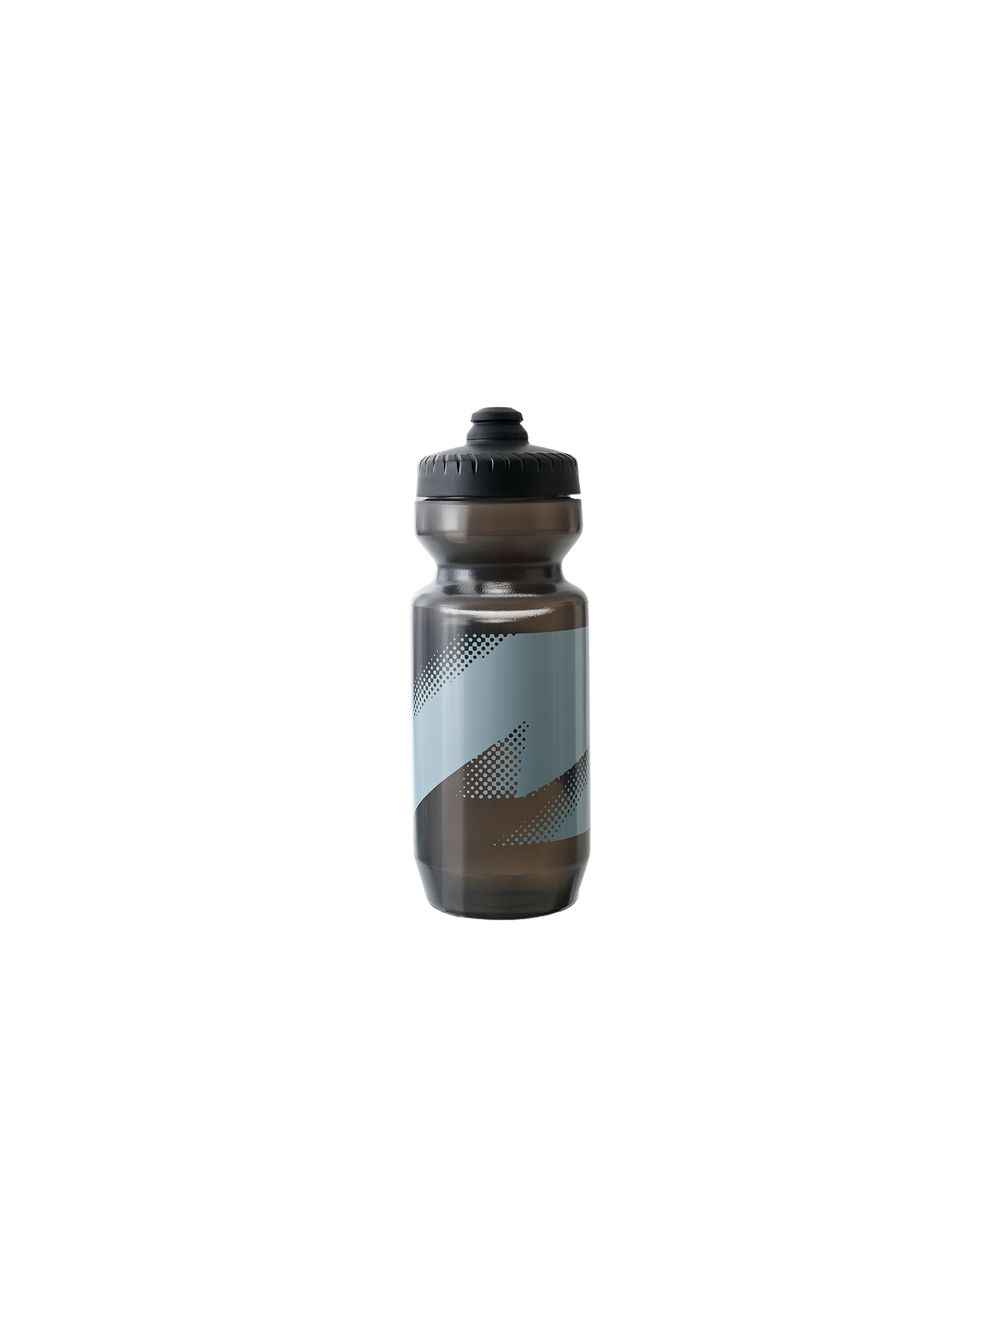 Product Image for Evolve Bottle